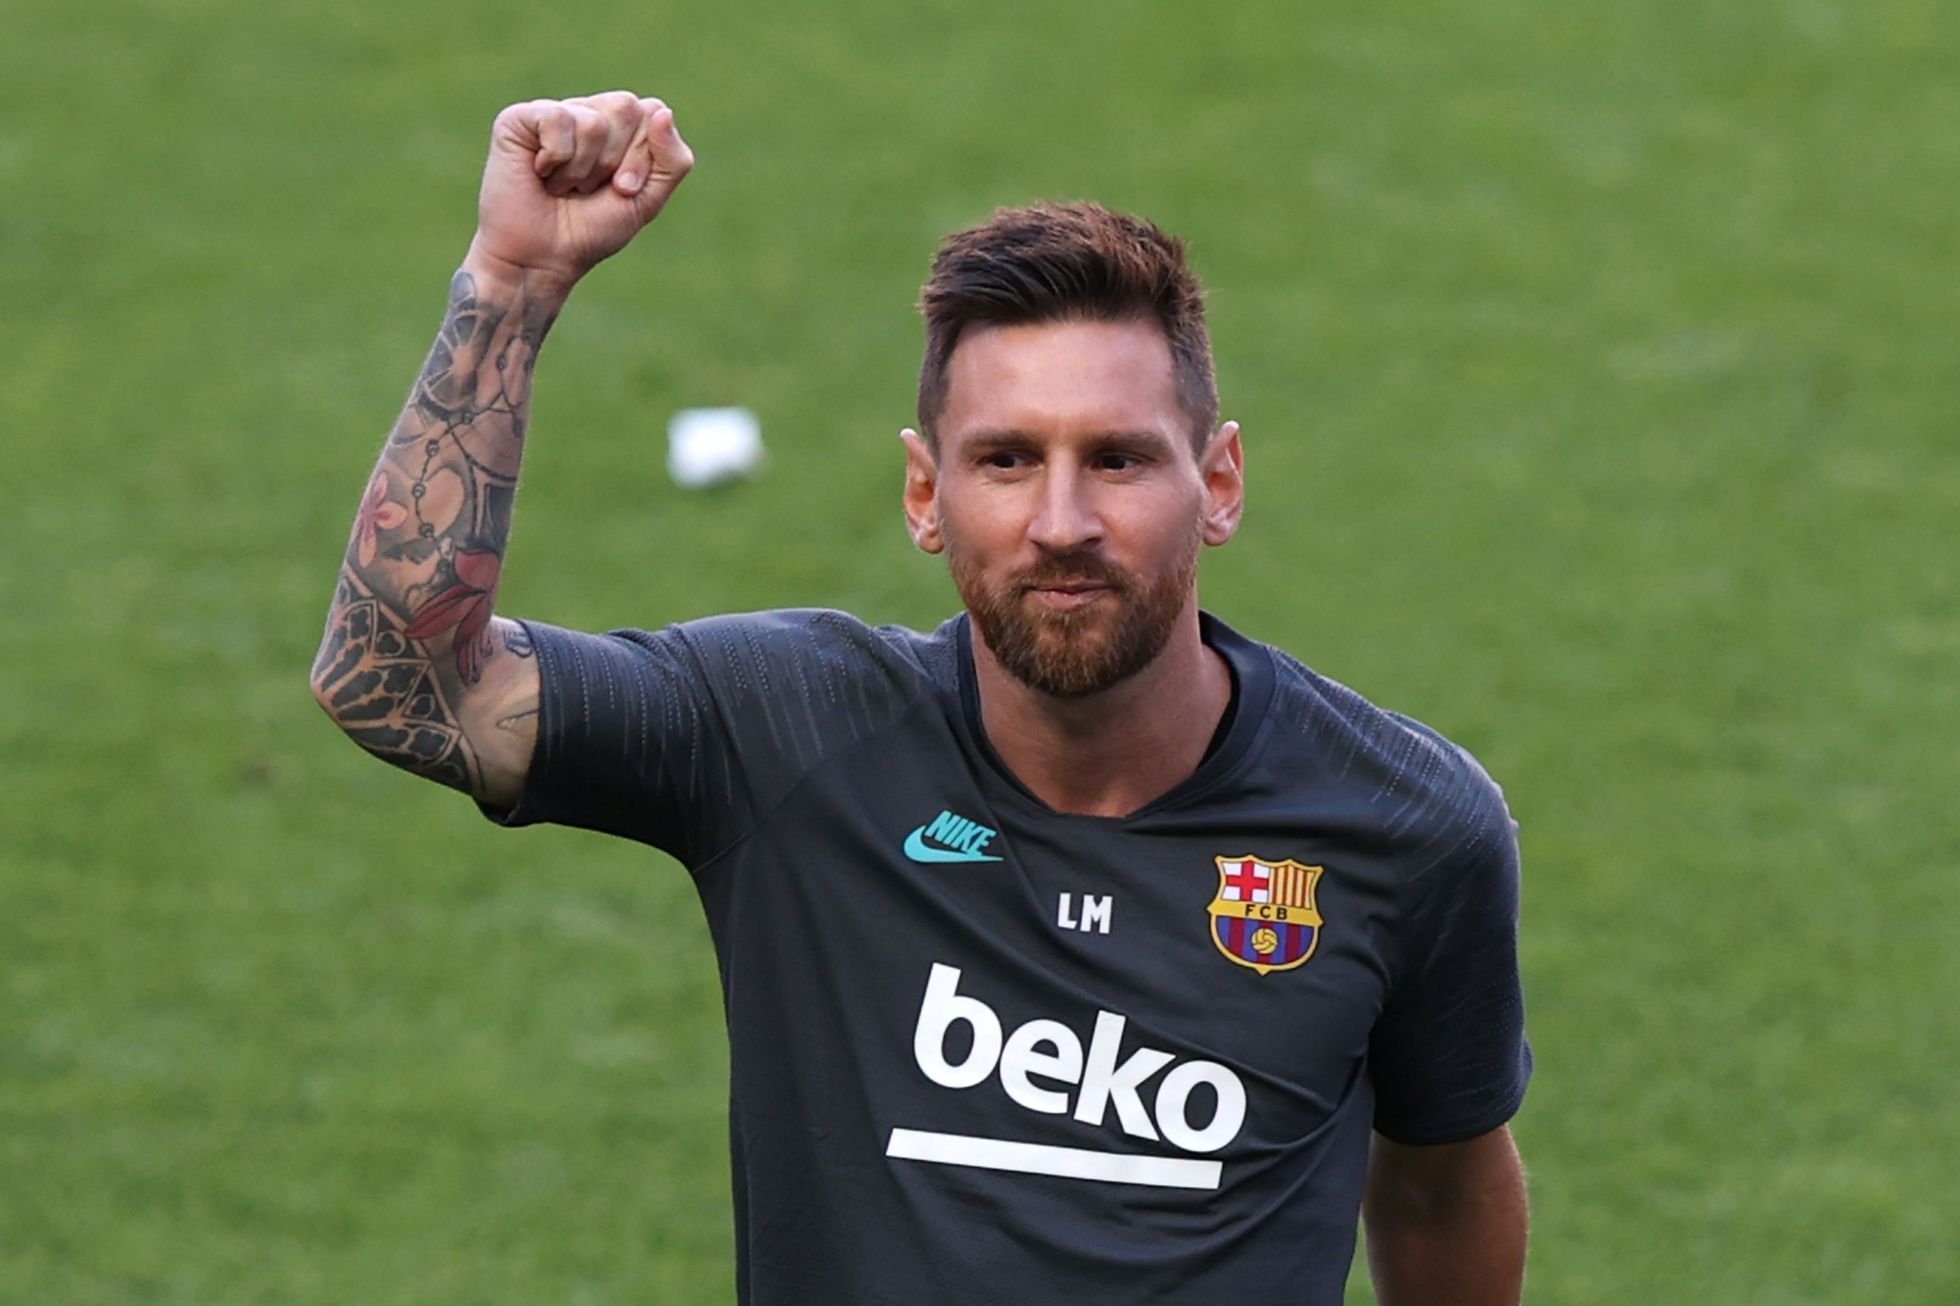 Champions League - FC Barcelona Training, Lionel Messi